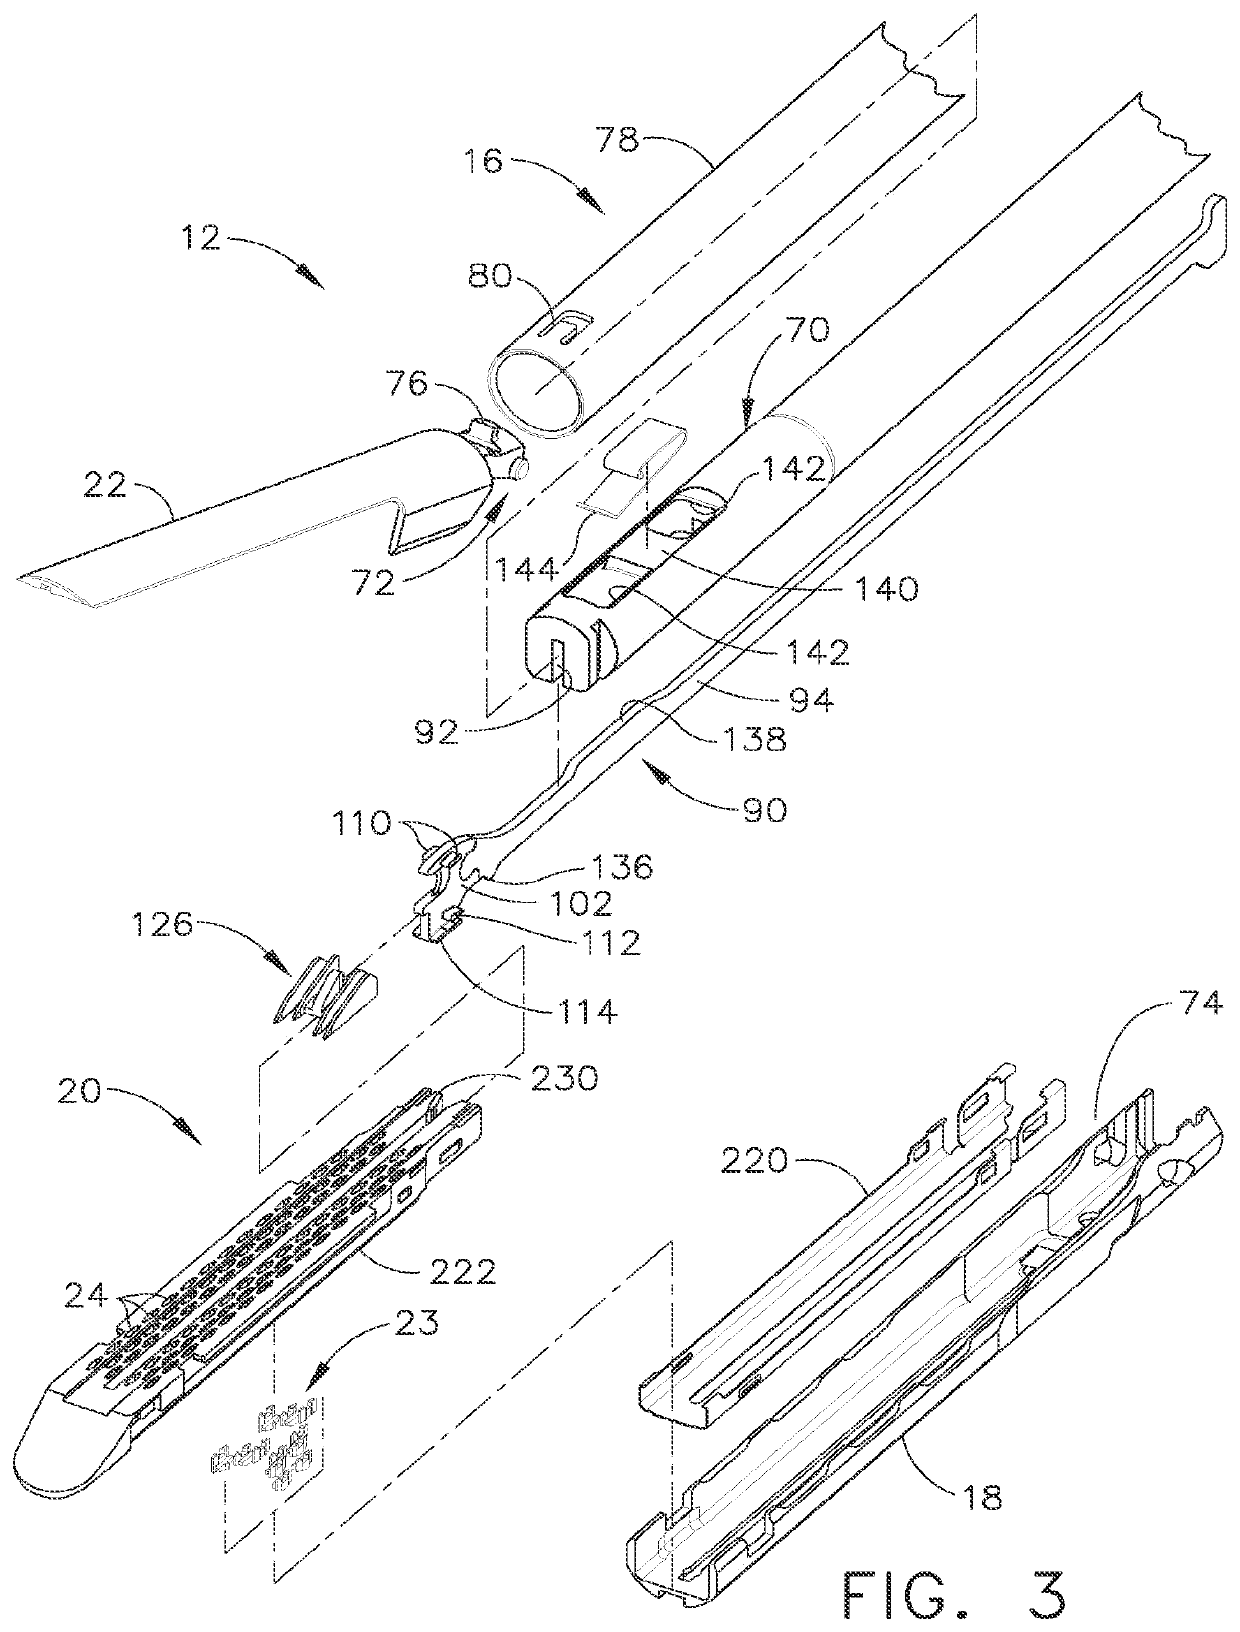 Articulating surgical stapling instrument incorporating a two-piece e-beam firing mechanism